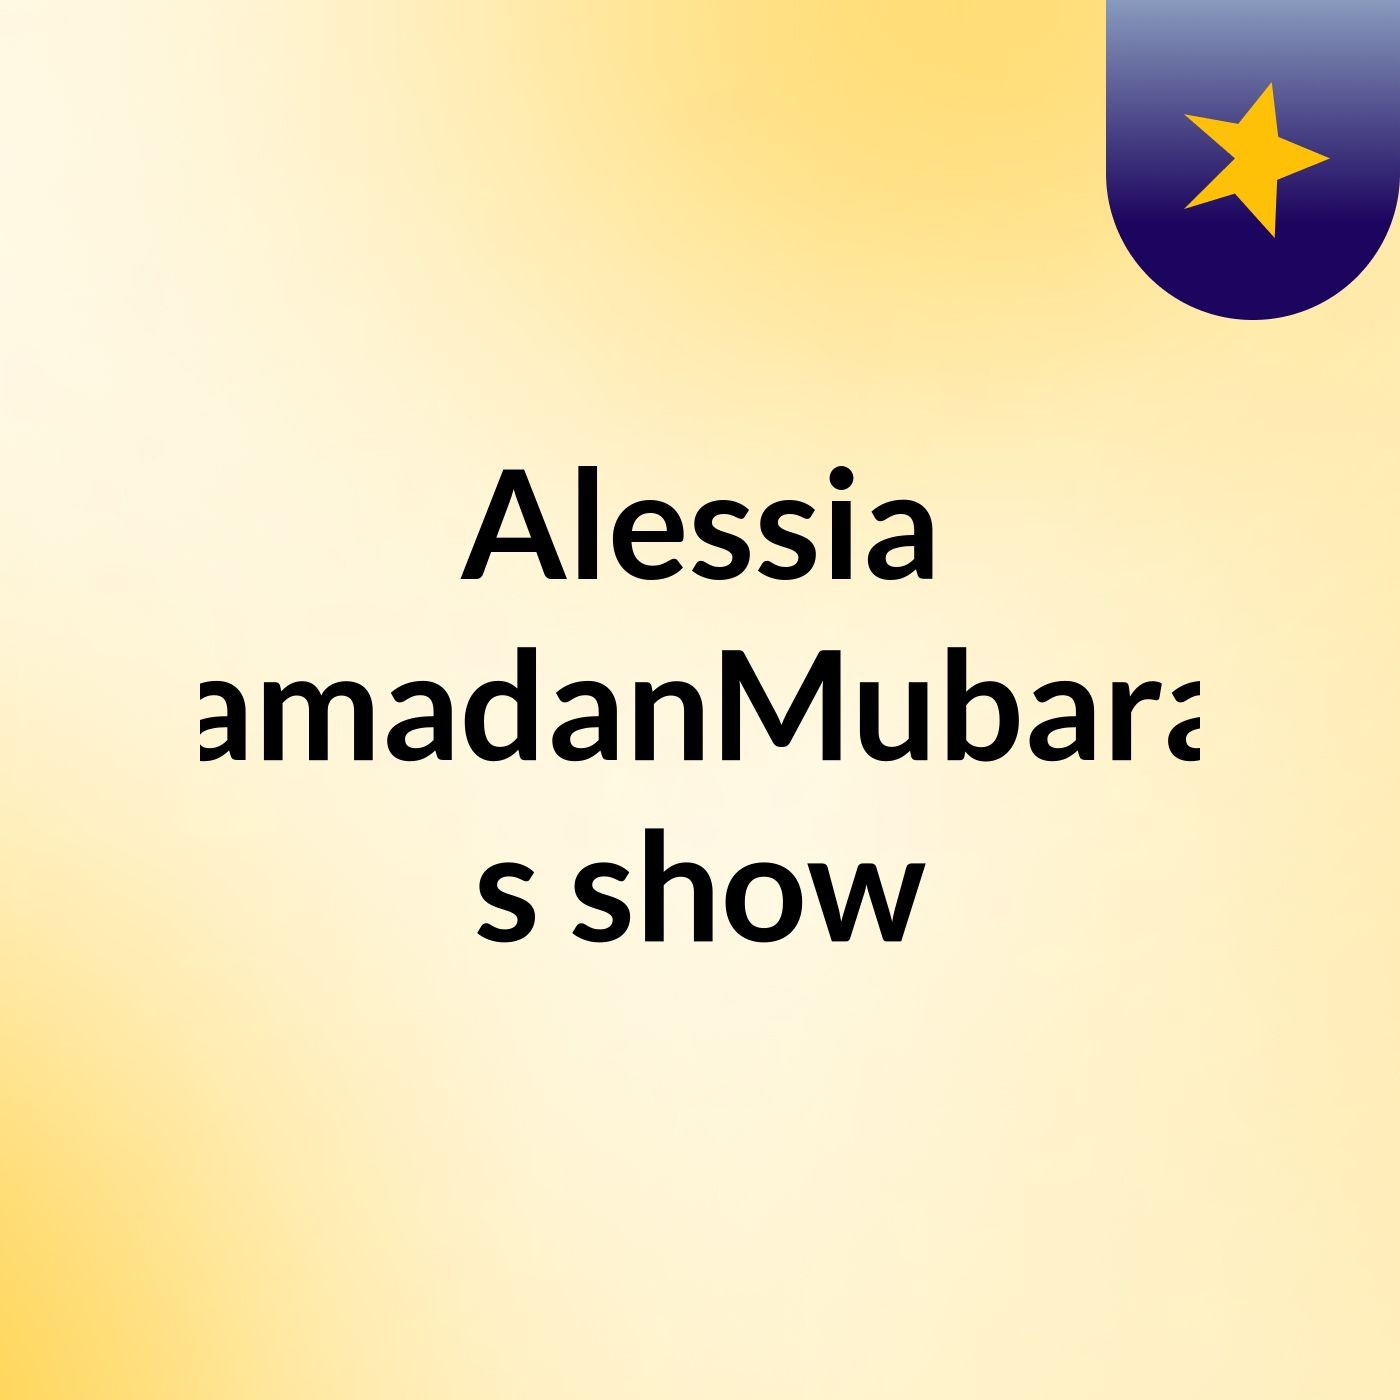 Alessia RamadanMubarak's show